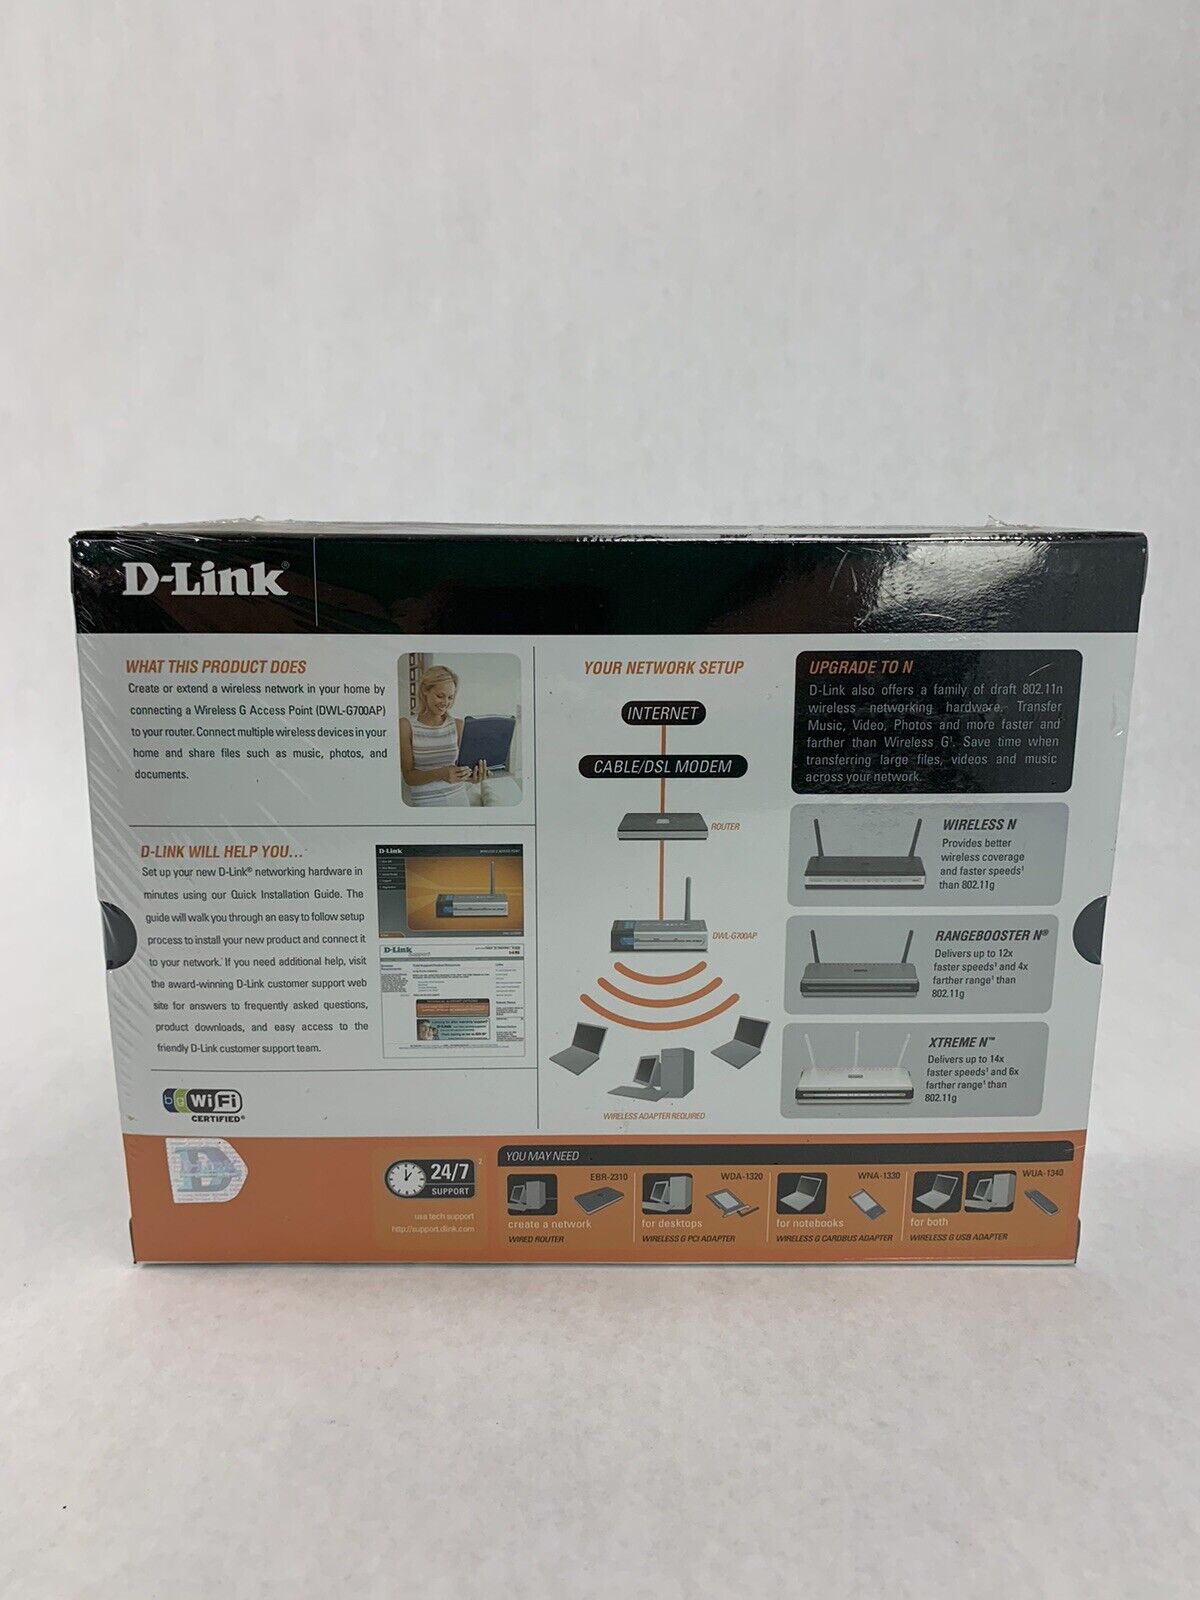 D-Link DWL-G700AP Wireless G AirPlus Wireless Access Point